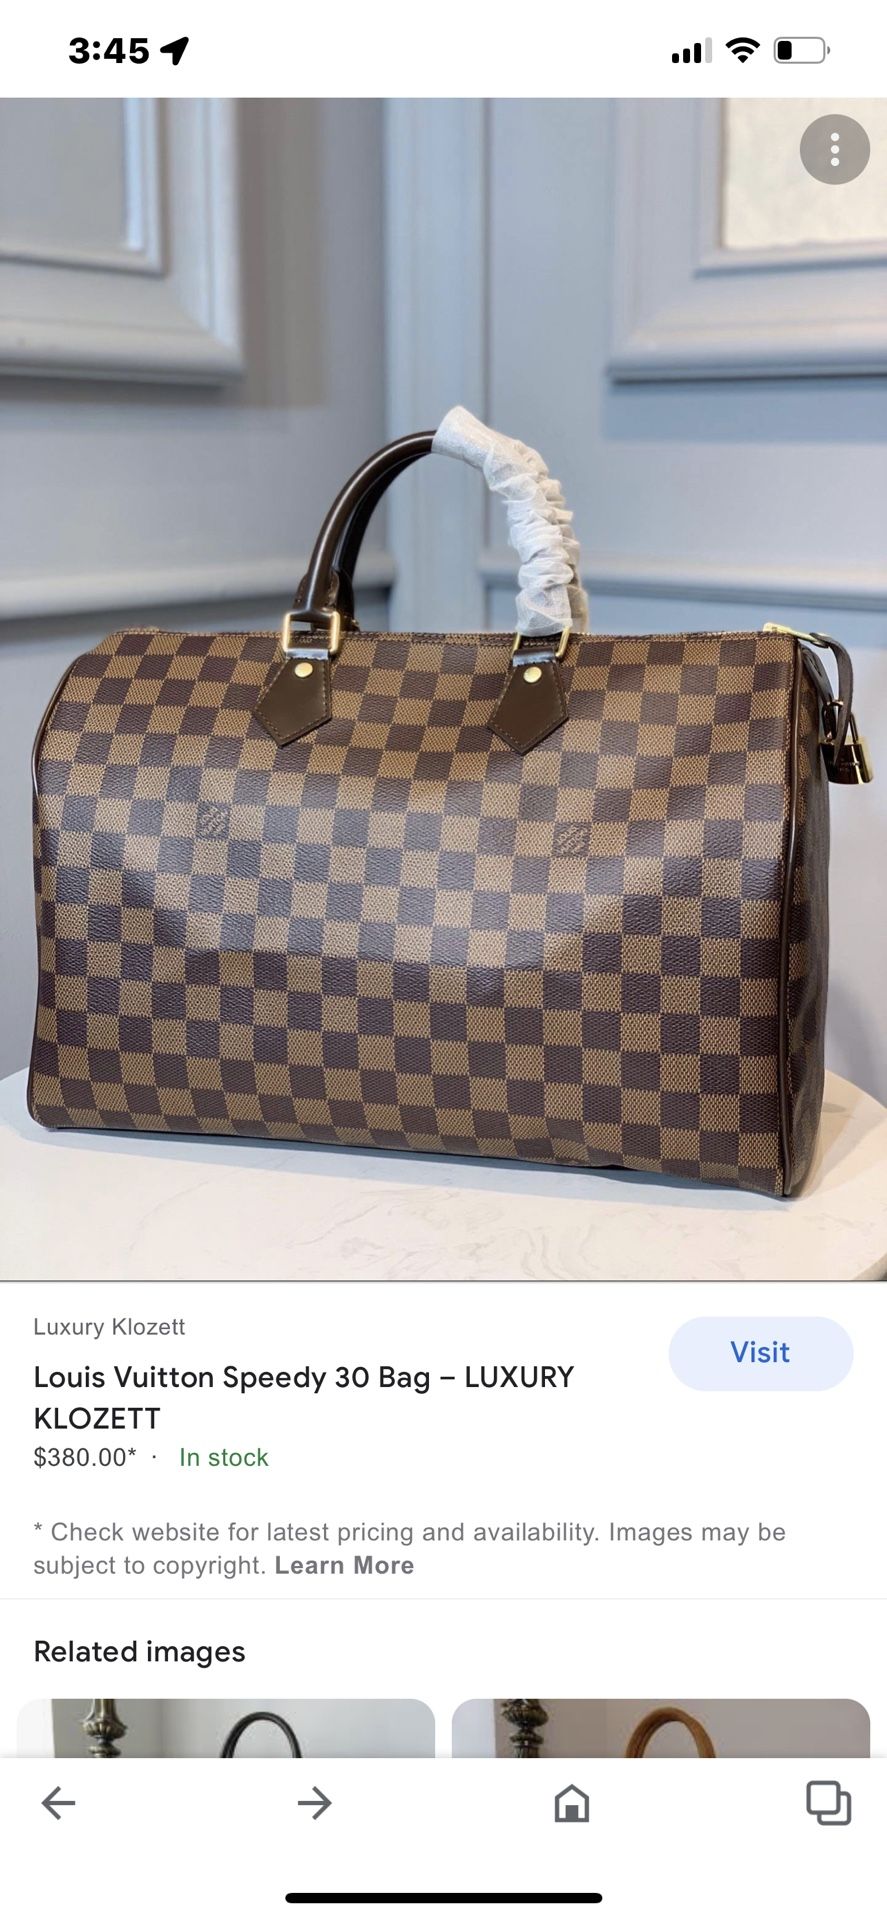 Louis Vuitton Speedy 30 Damier Ebene Handbag